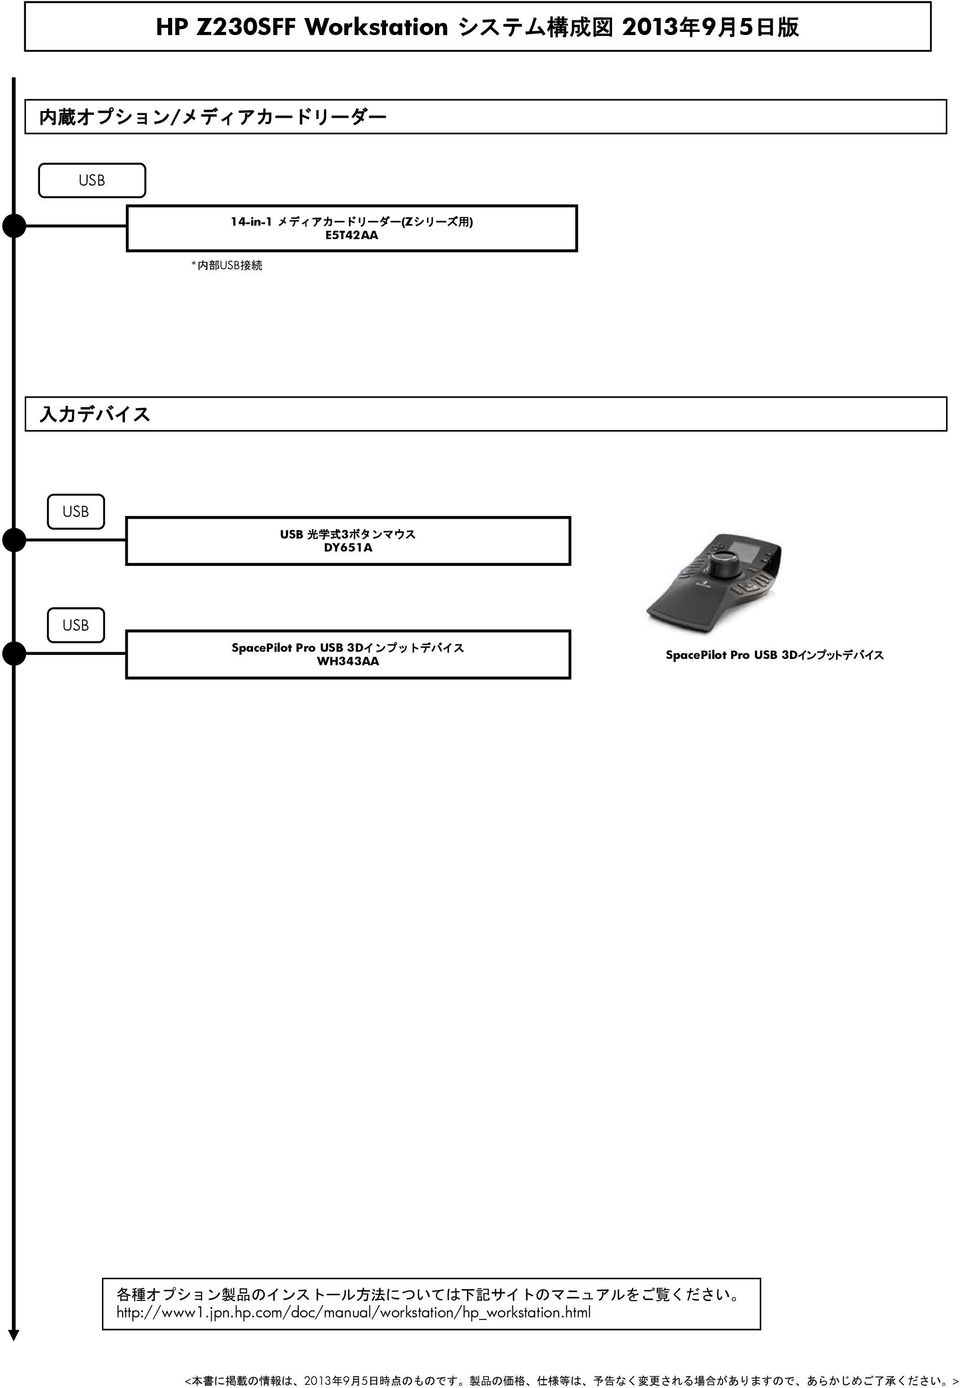 WH343AA SpacePilot Pro USB 3Dインプットデバイス 各 種 オプション 製 品 のインストール 方 法 については 下 記